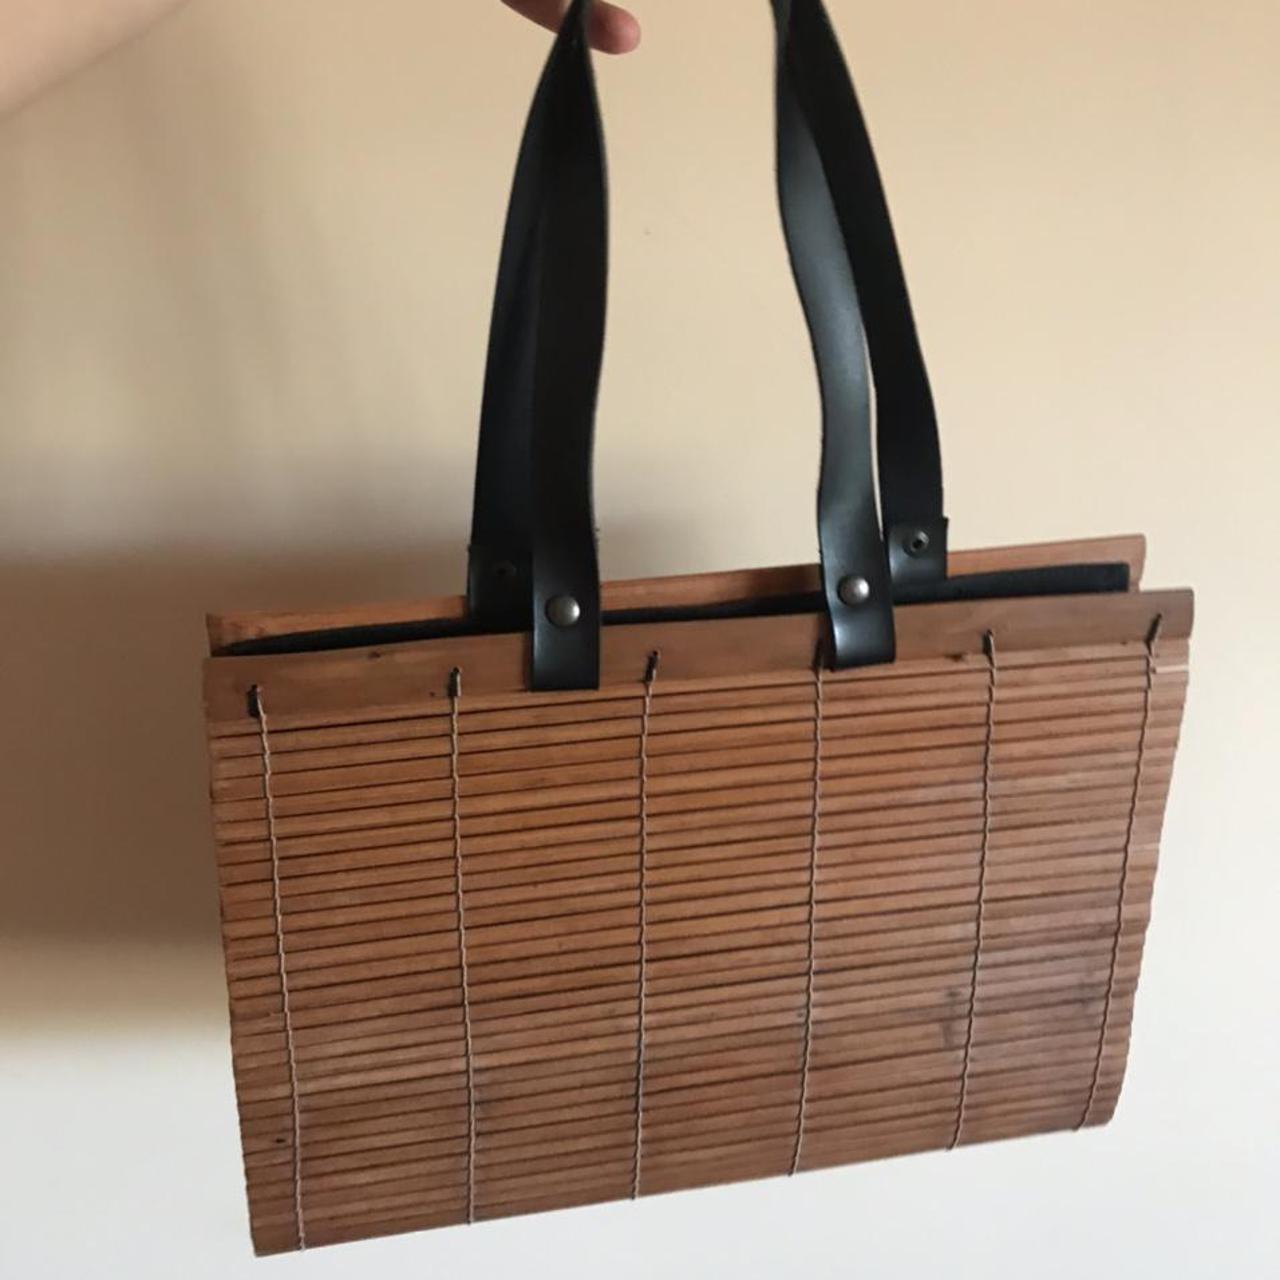 Product Image 3 - Wicker vintage brown Handbag with